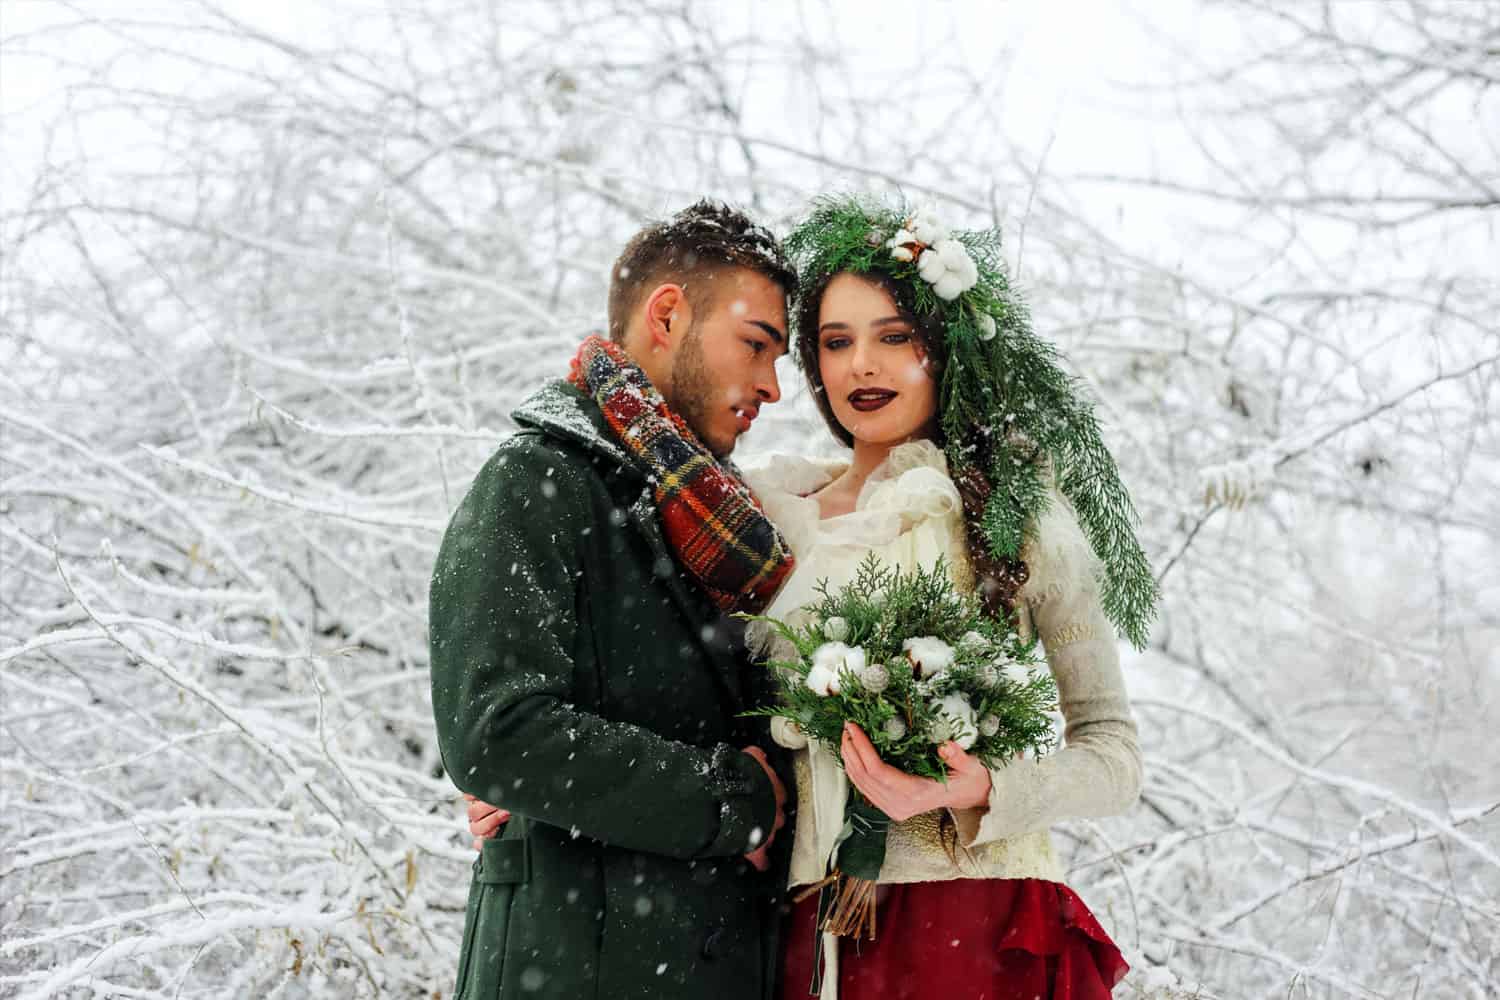 Winter wedding in the snow